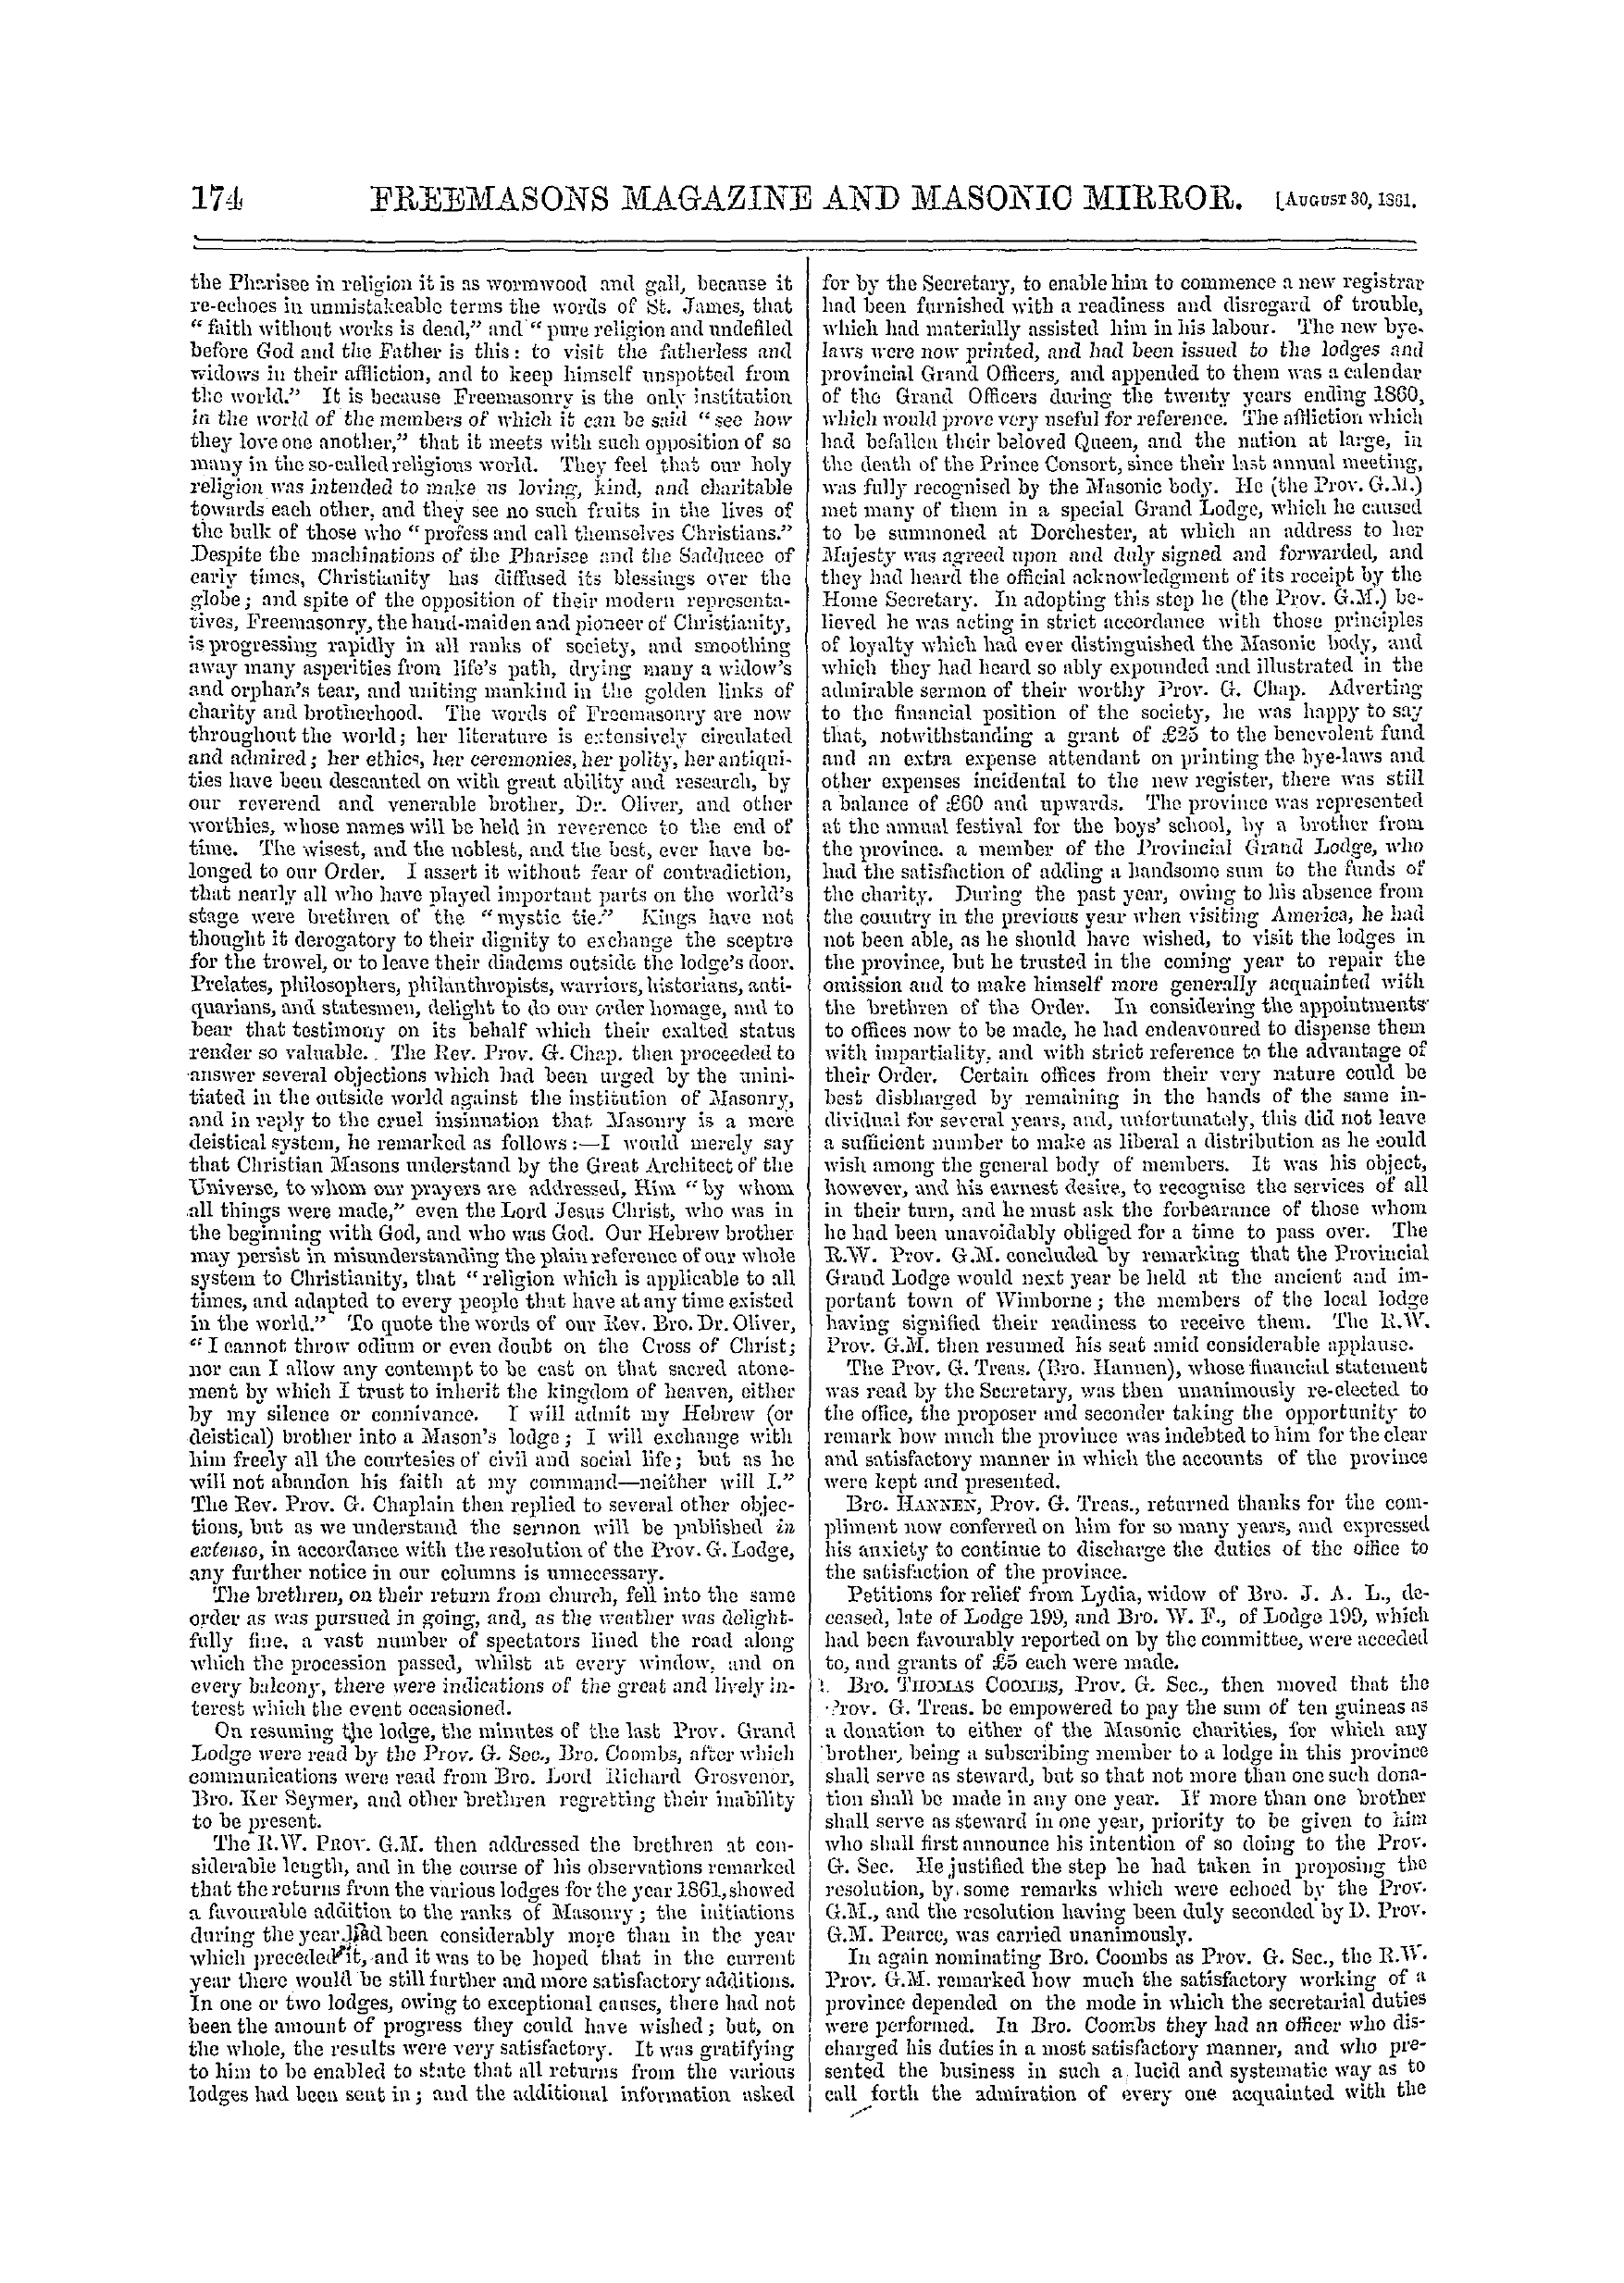 The Freemasons' Monthly Magazine: 1862-08-30 - Provincial.